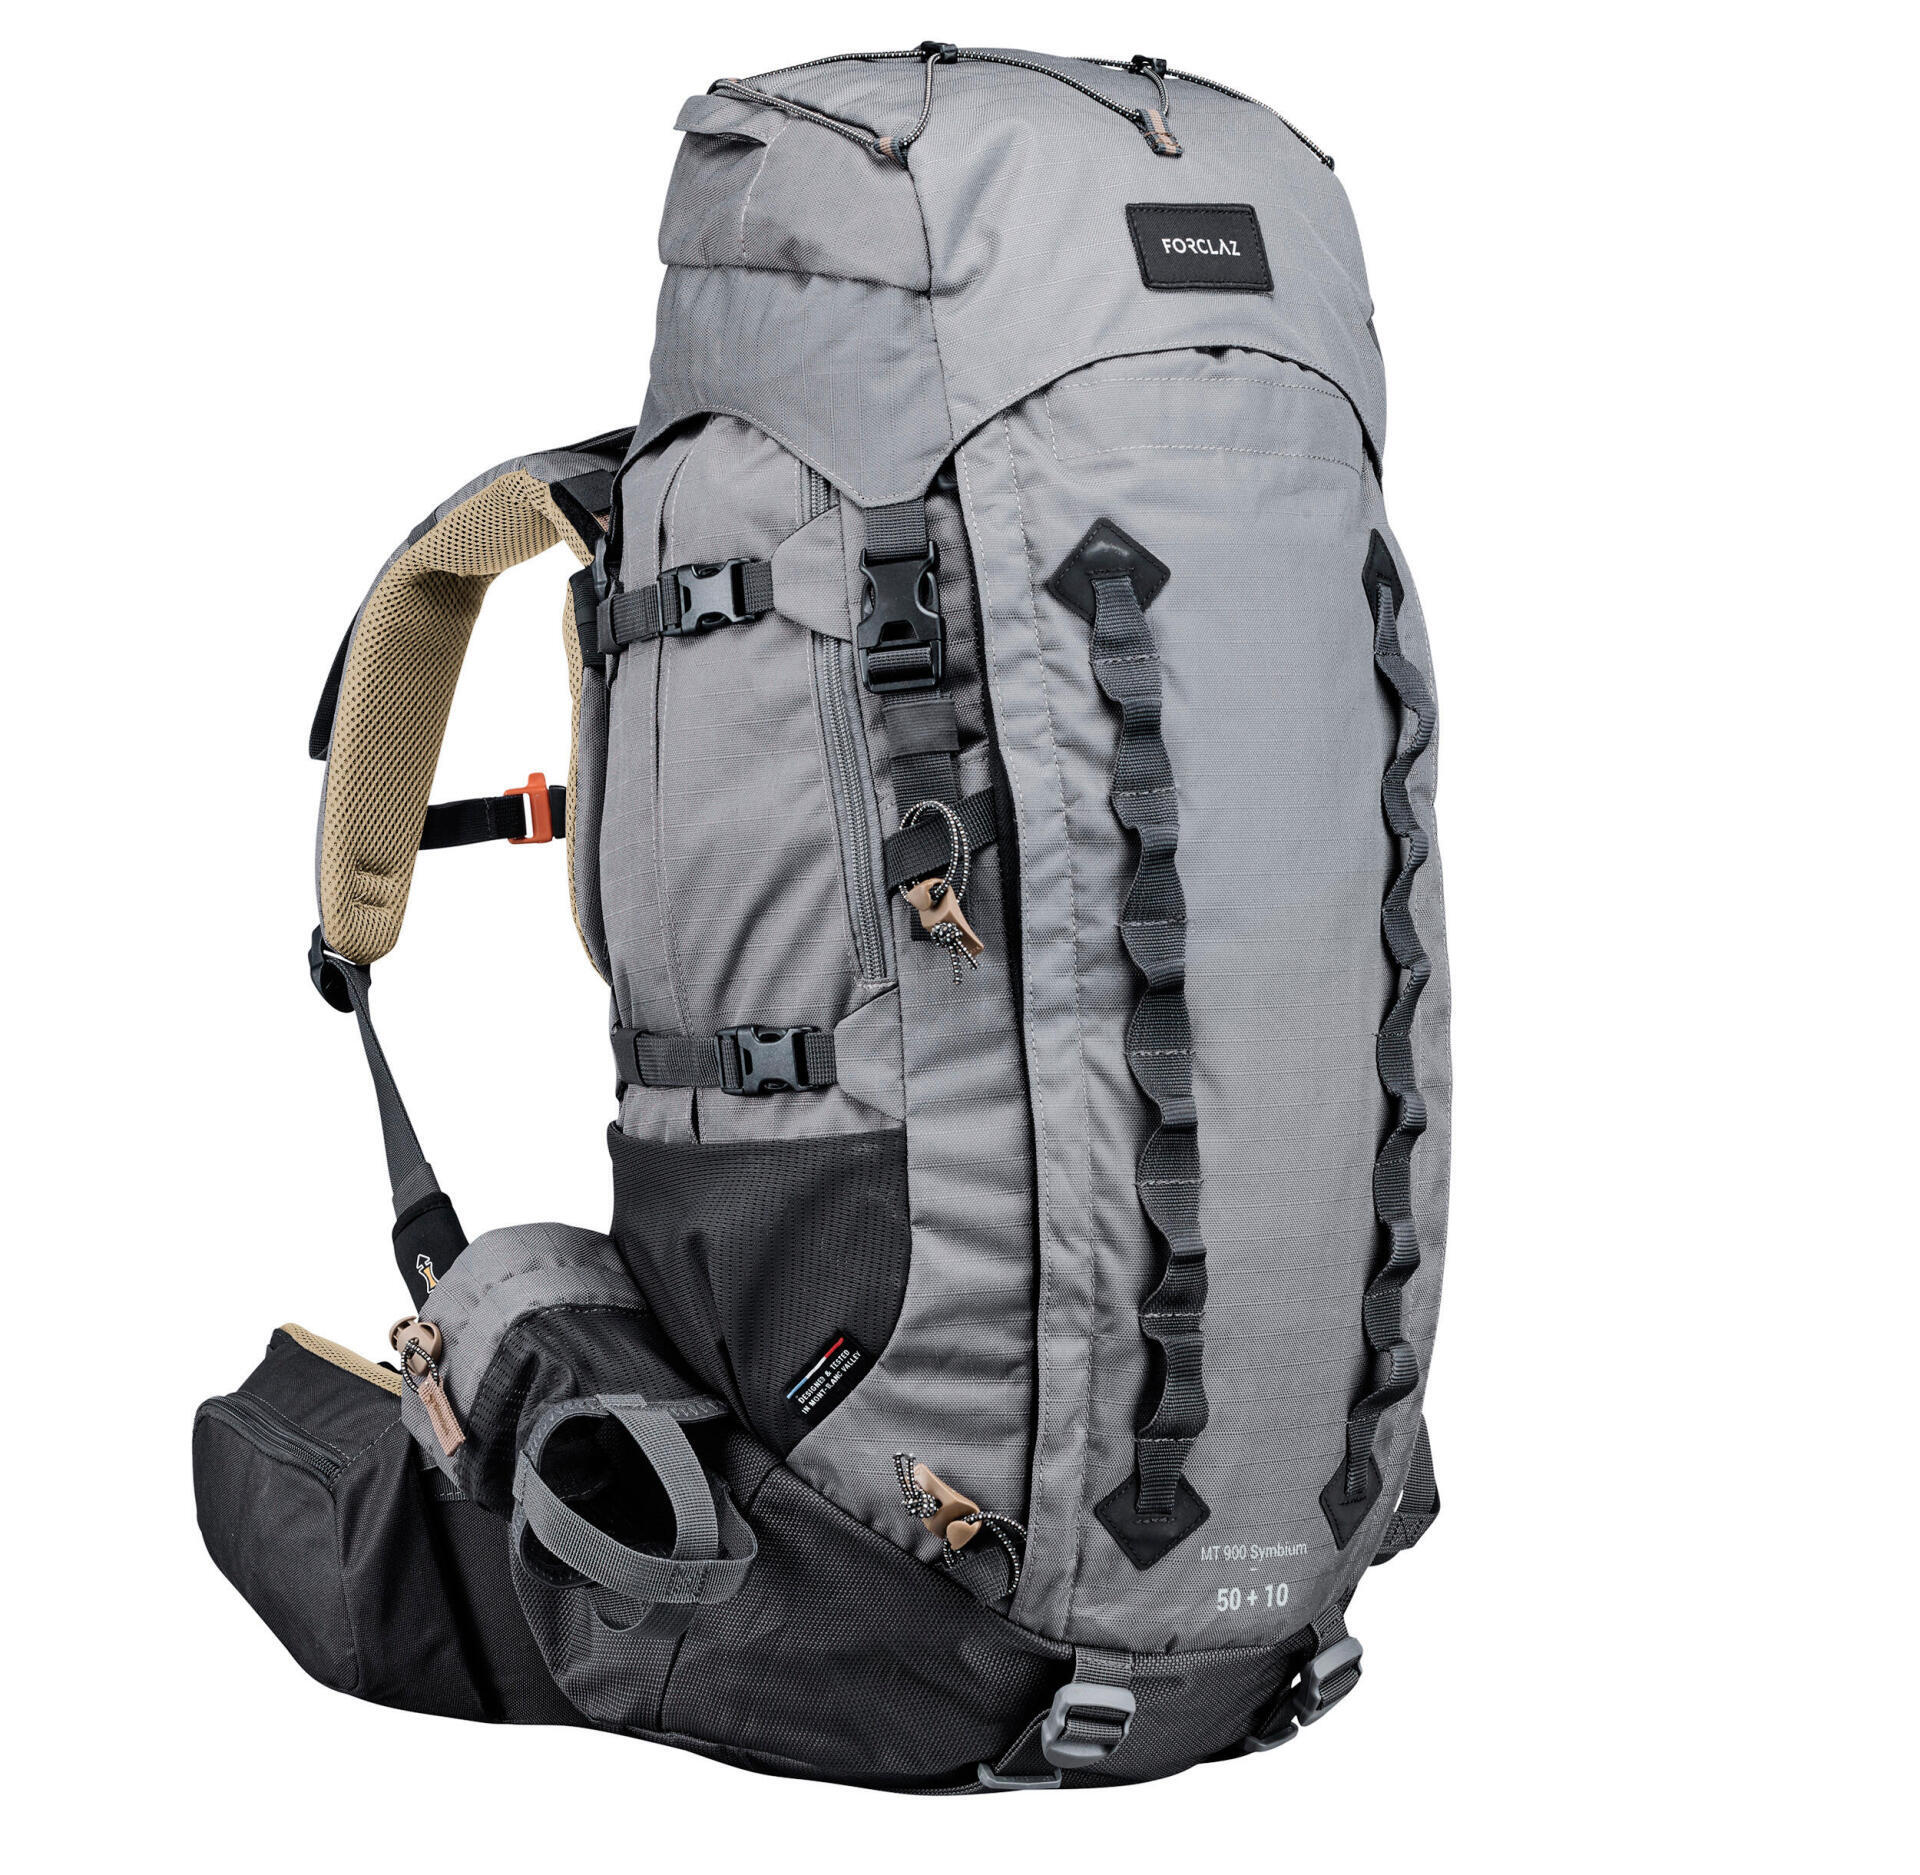 Choosing a durable backpack